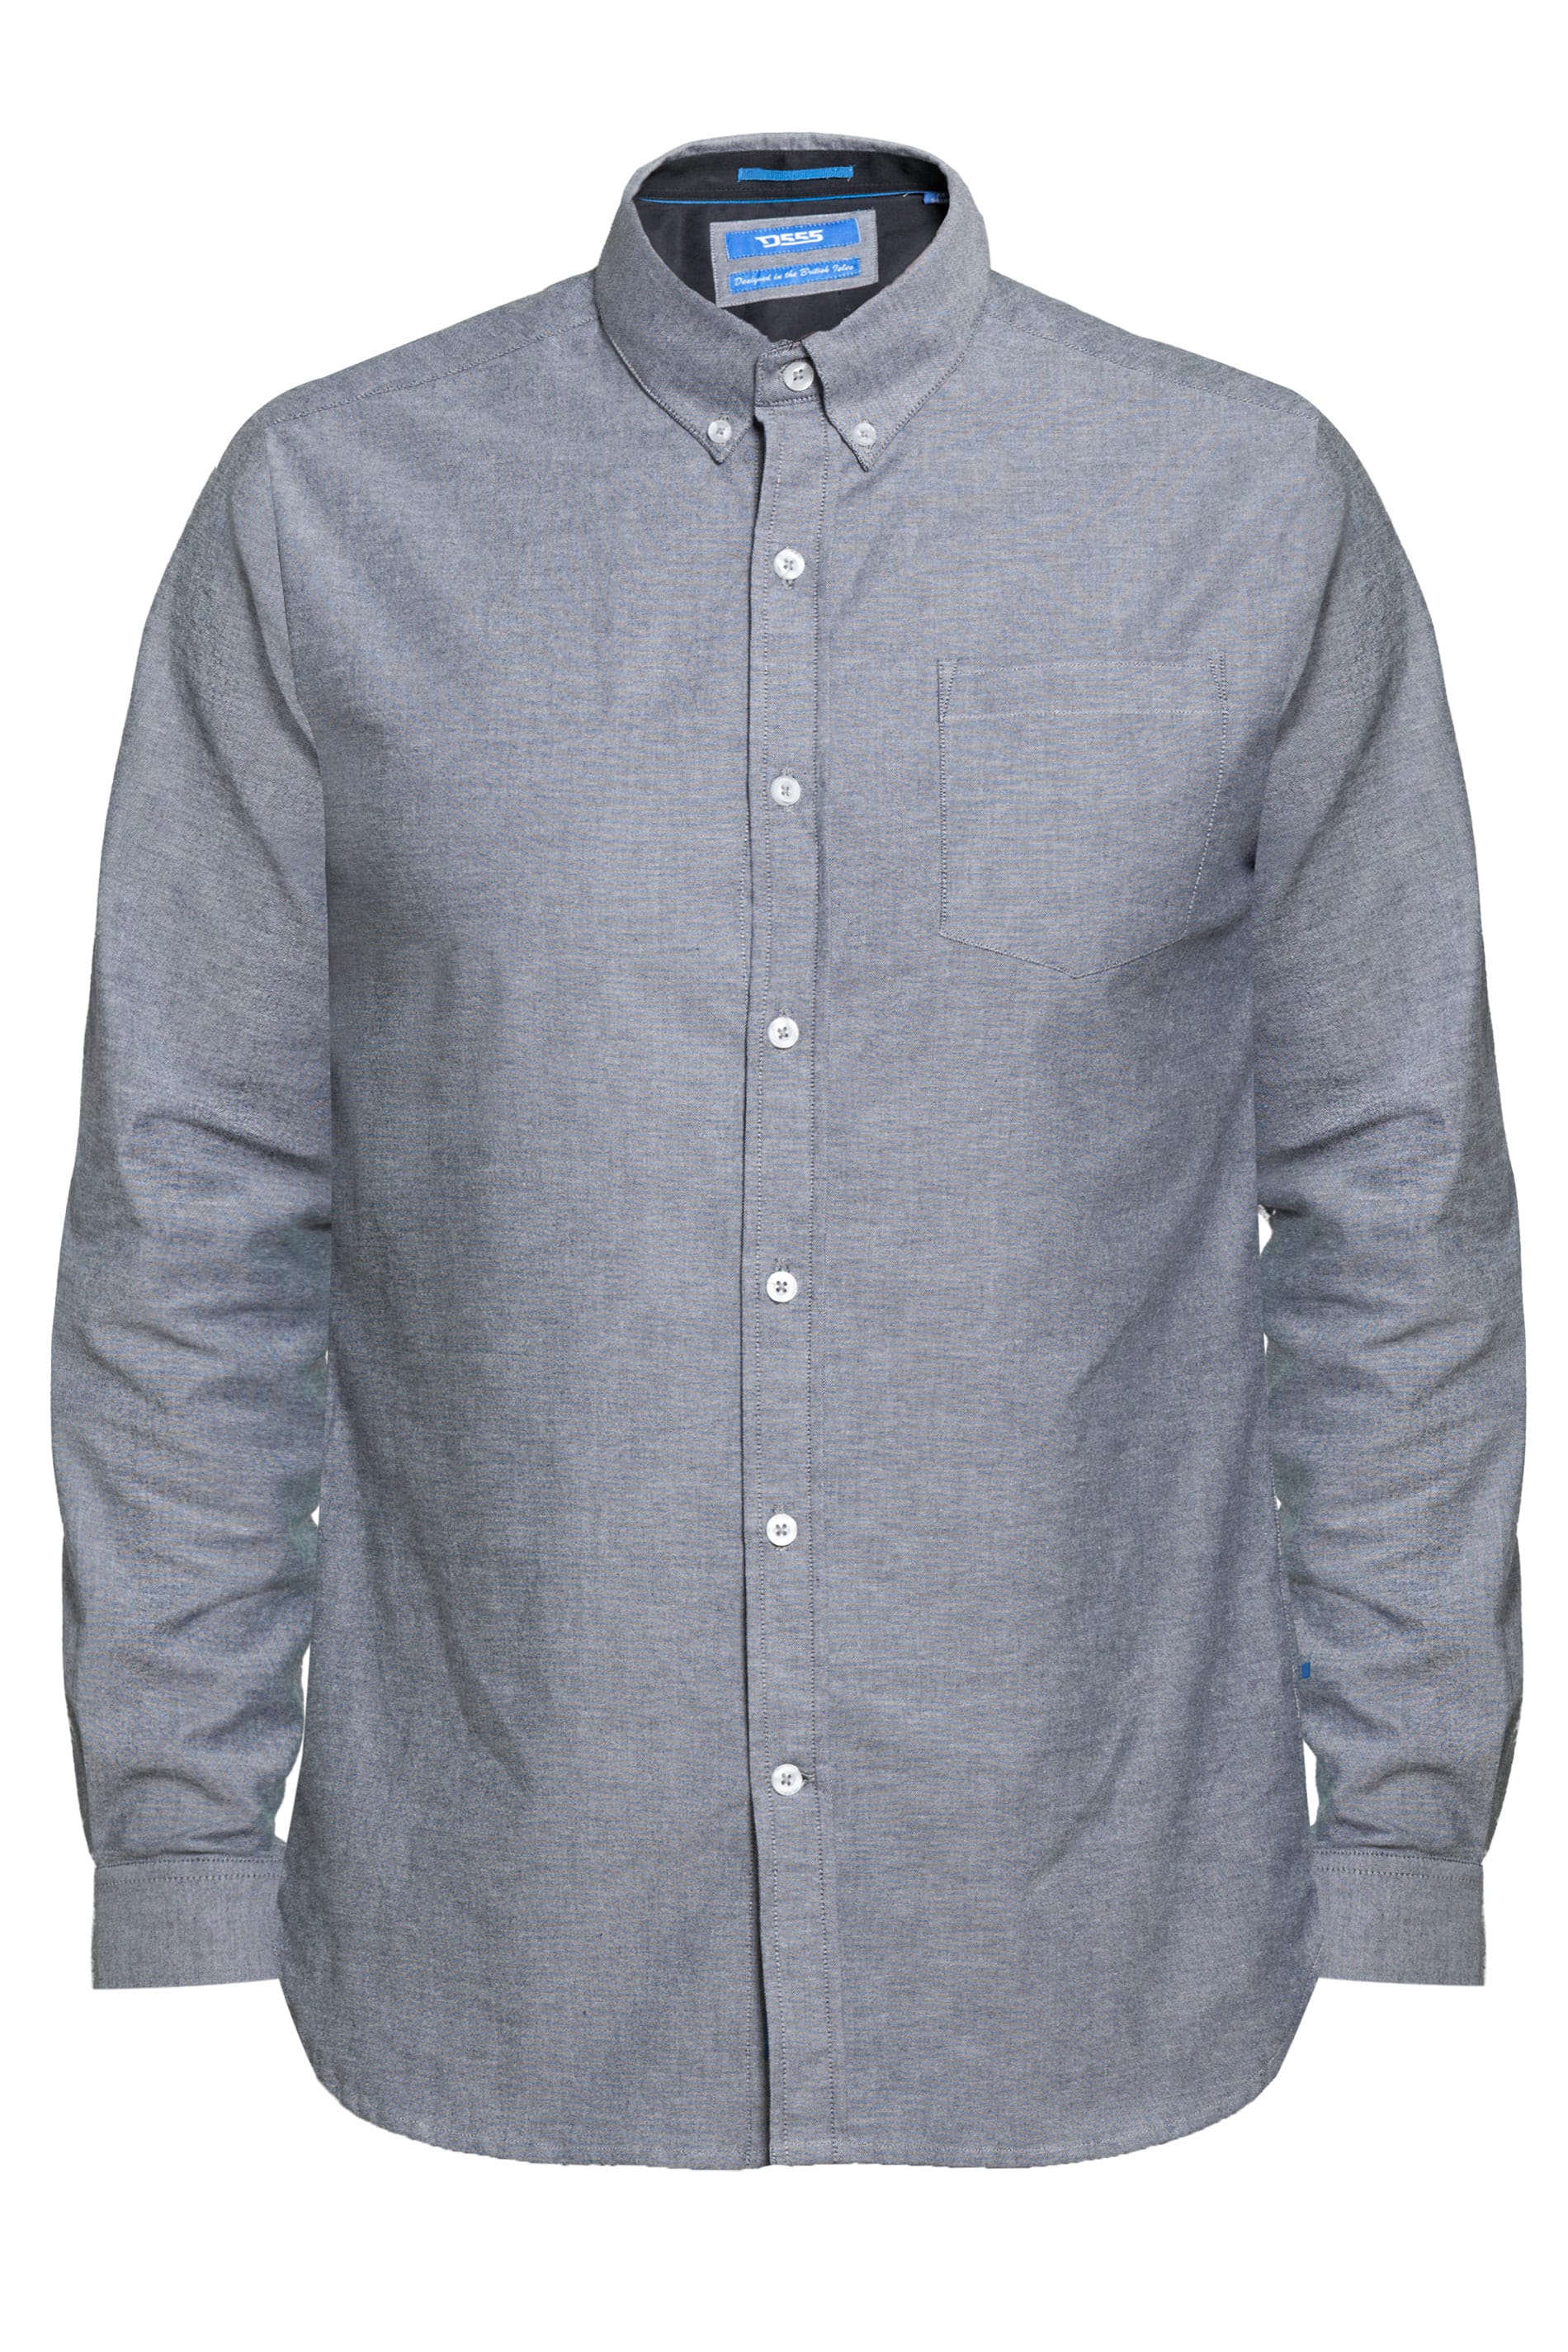 D555 Grey Button Down Stretch Shirt | BadRhino